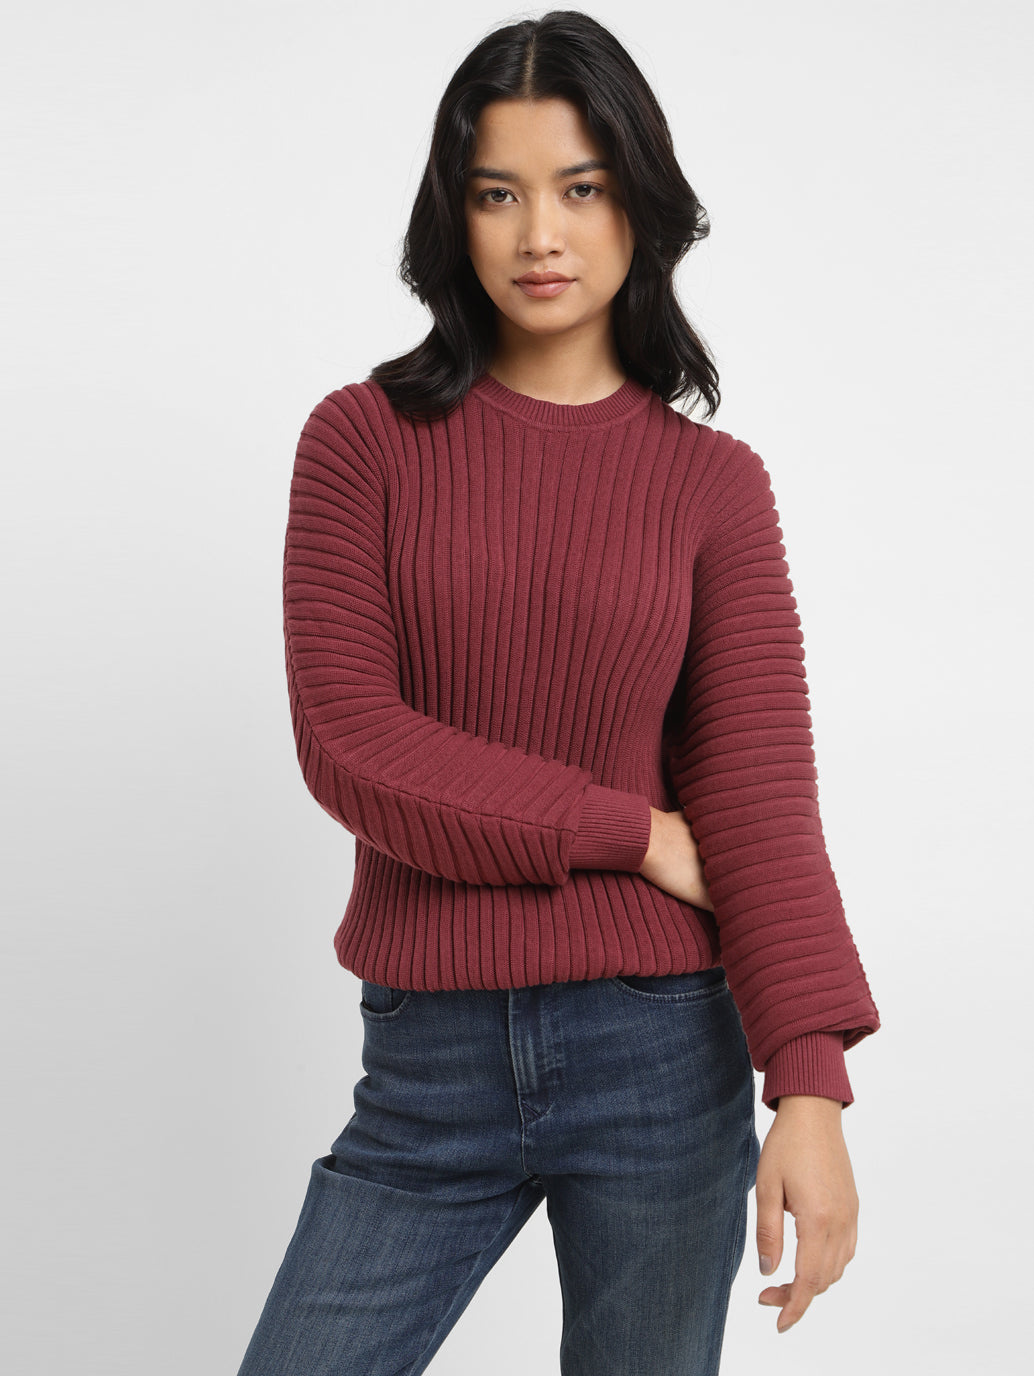 Women's Self Design Maroon Crew Neck Sweater – Levis India Store